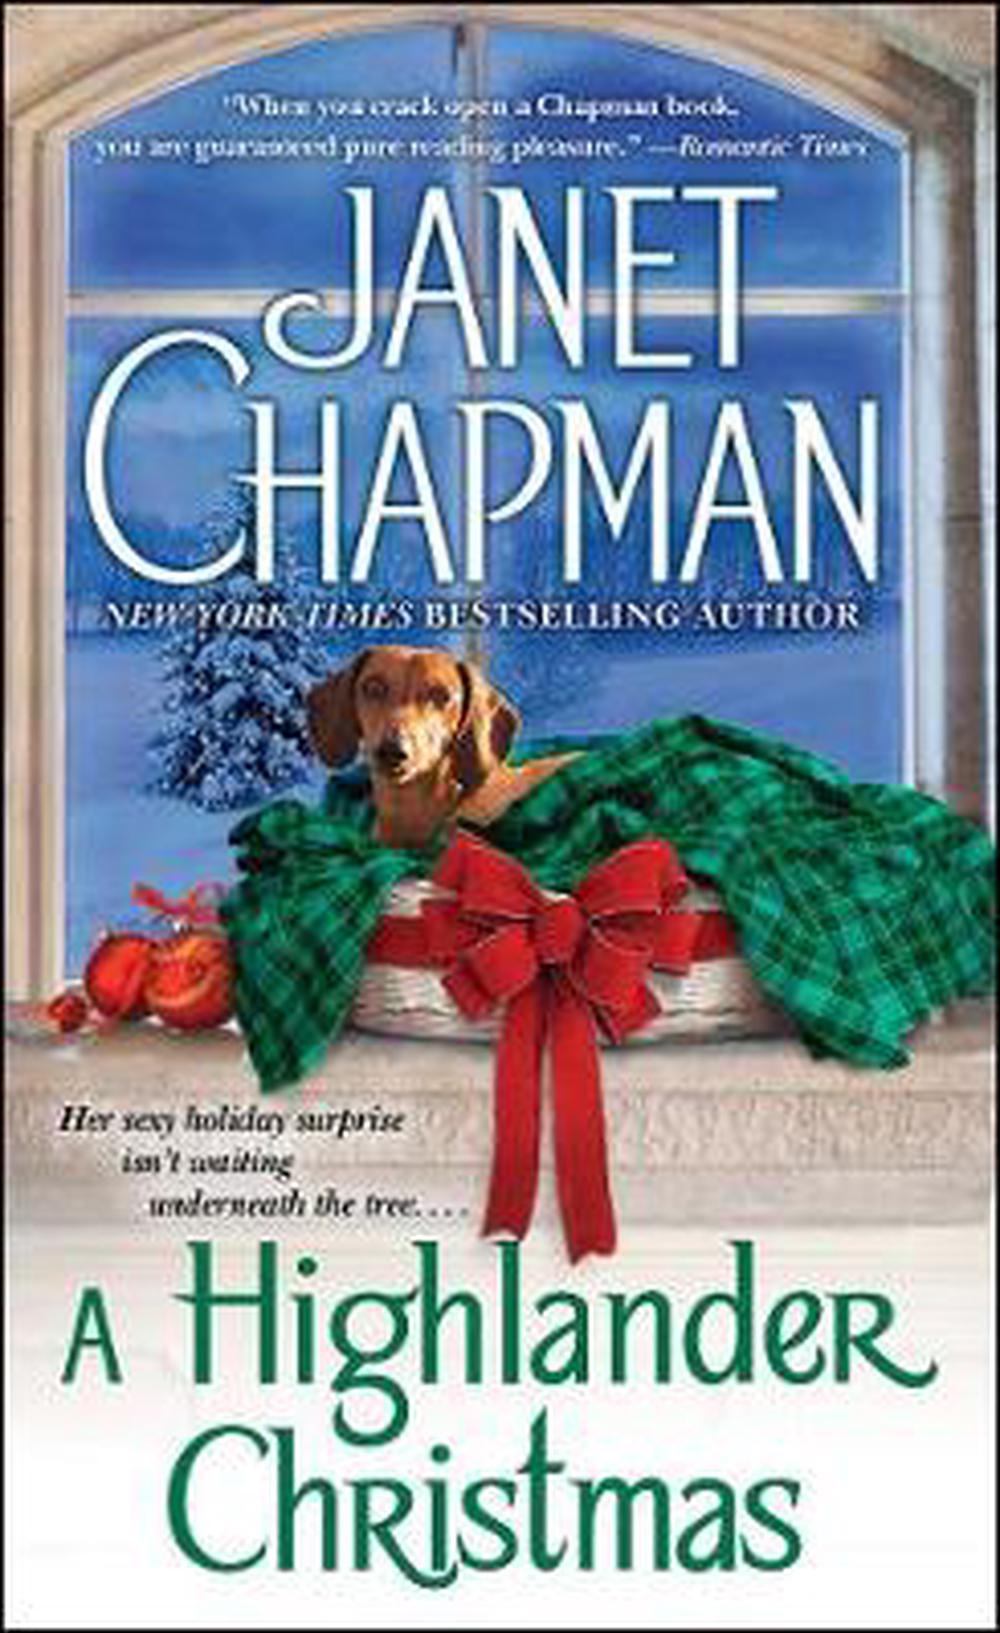 A Highlander Christmas by Janet Chapman (English) Mass Market Paperback ...